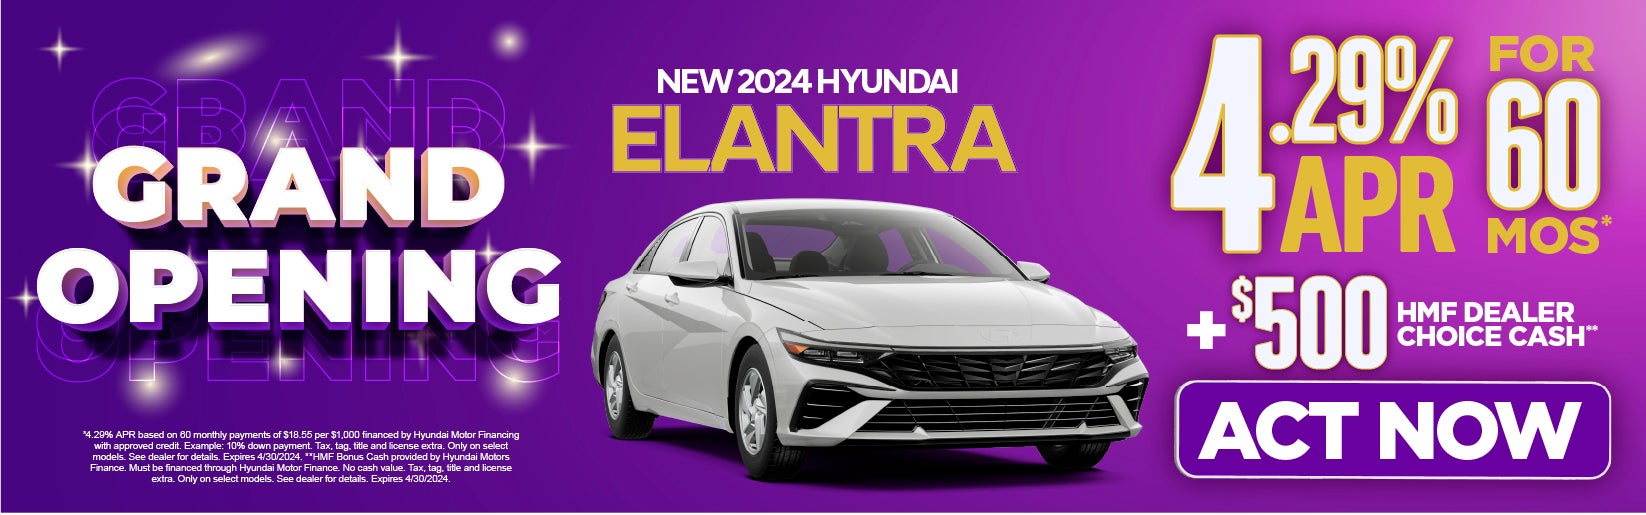 New 2024 Hyundai Elantra - 4.29% APR for 60 months. Act Now.